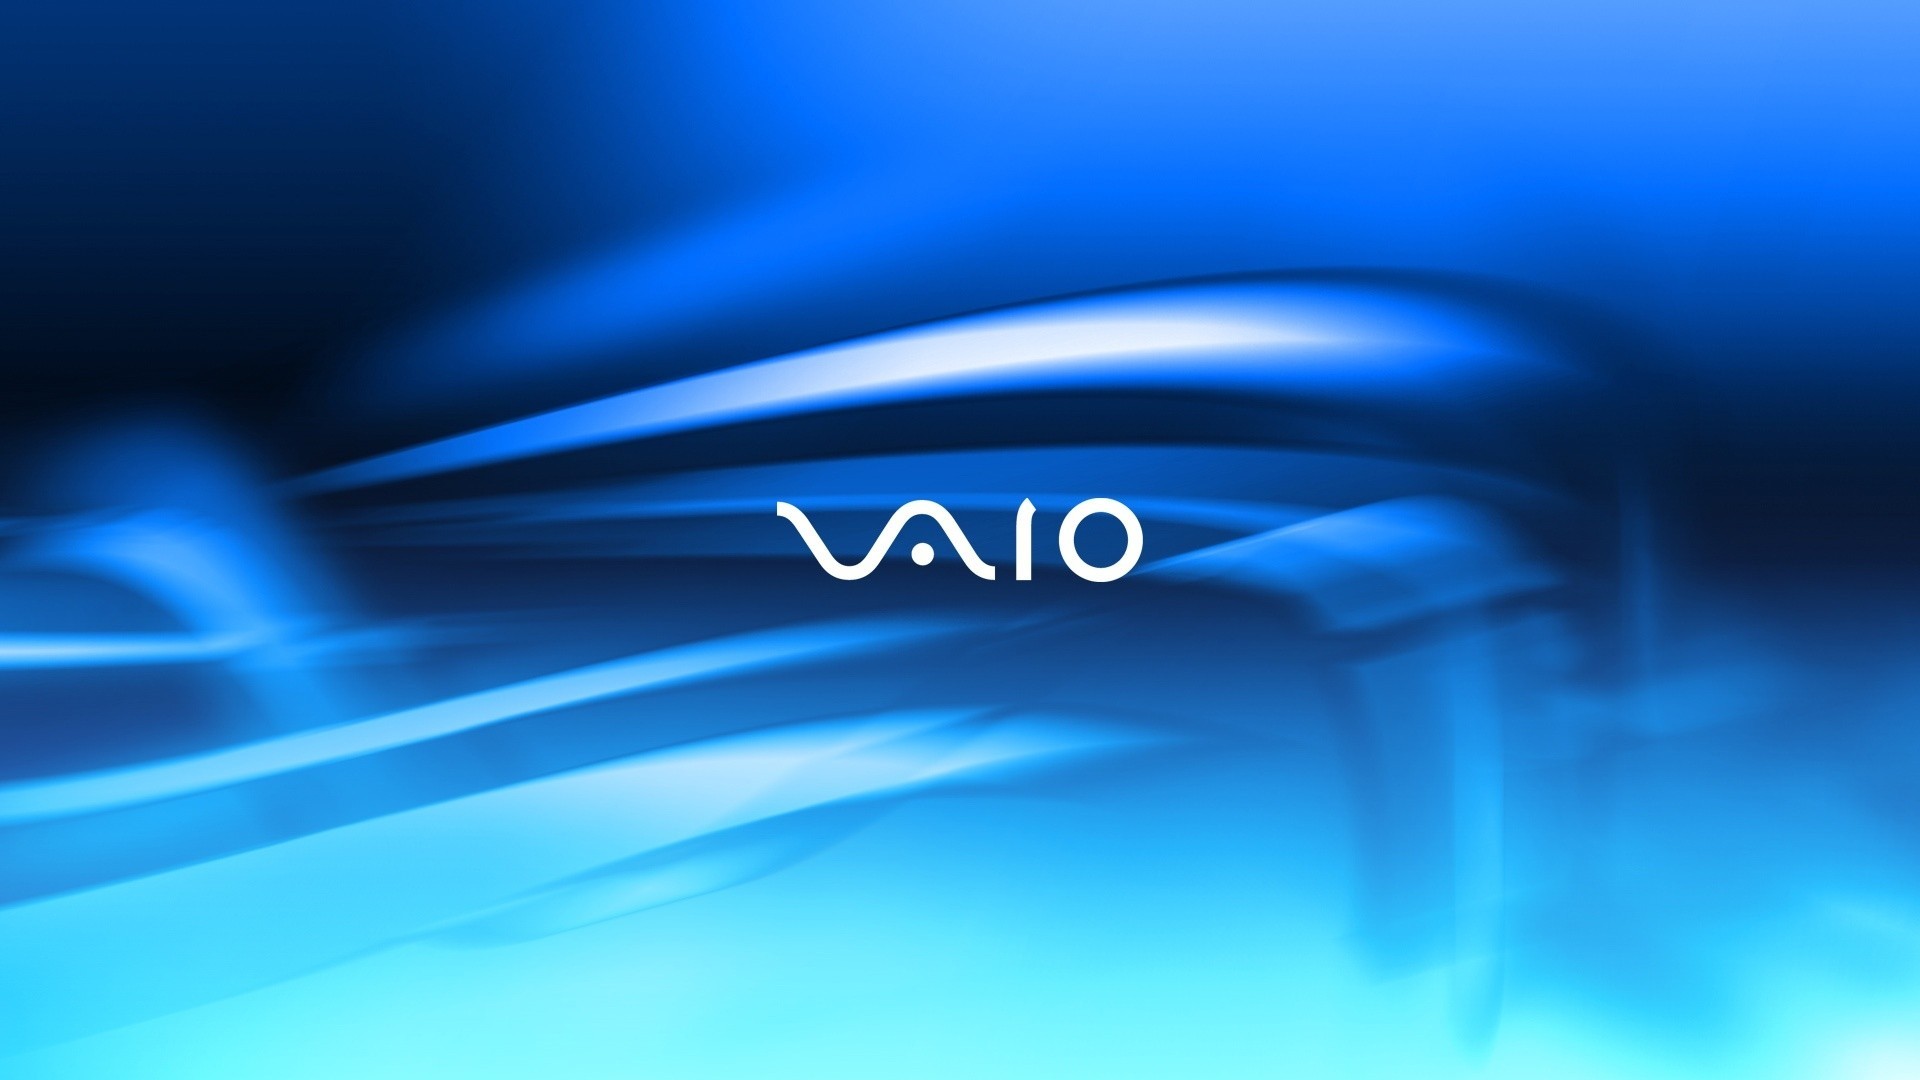 General 1920x1080 Sony VAIO logo blue background hardware